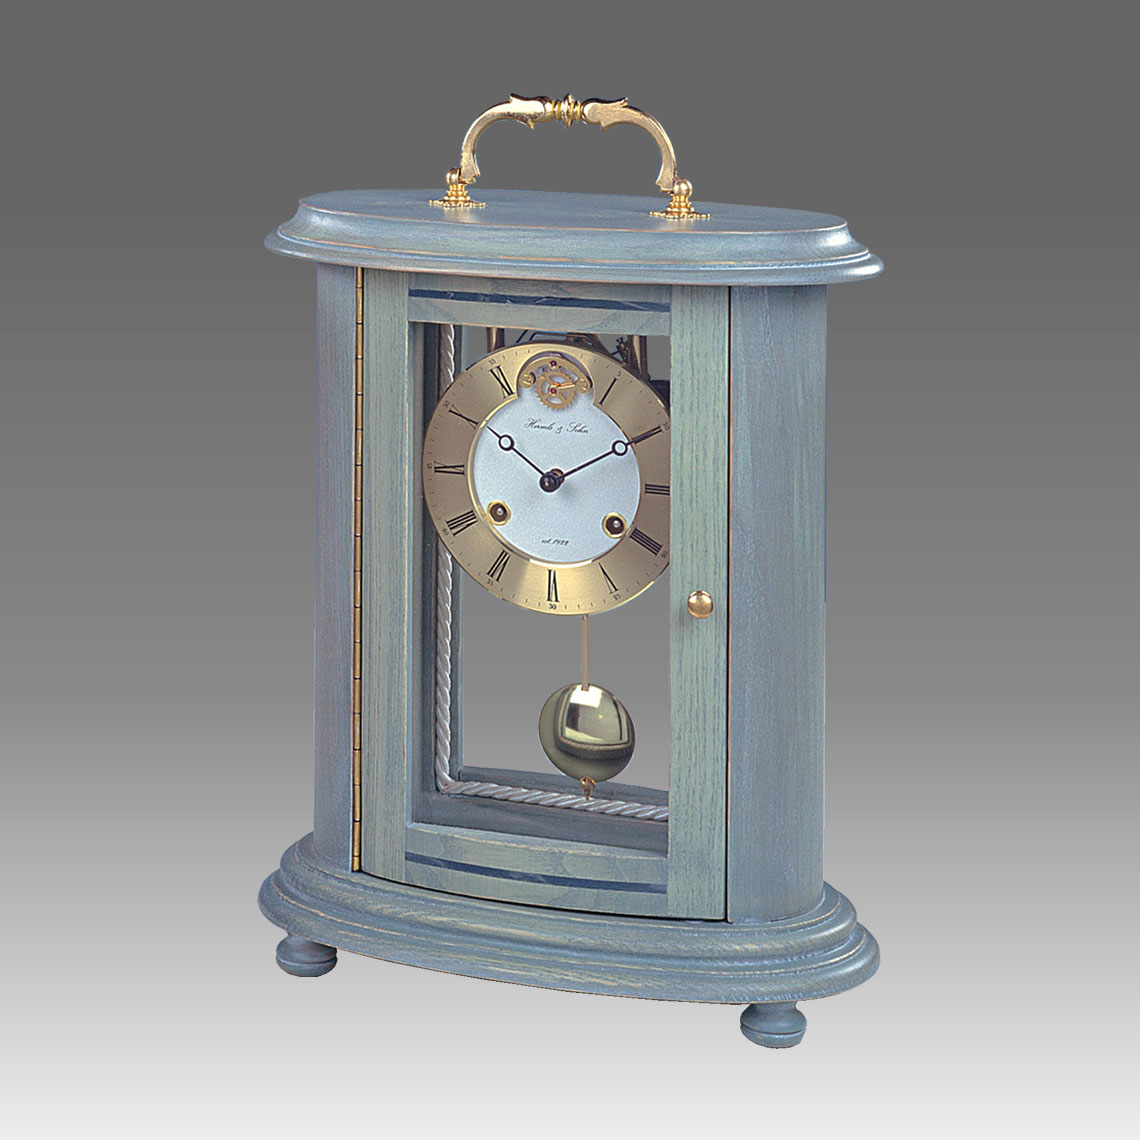 Mante Clock, Table Clock, Cimn Clock, Art.322/4 de cape light blue - Bim Bam melody on Bells, white round dial